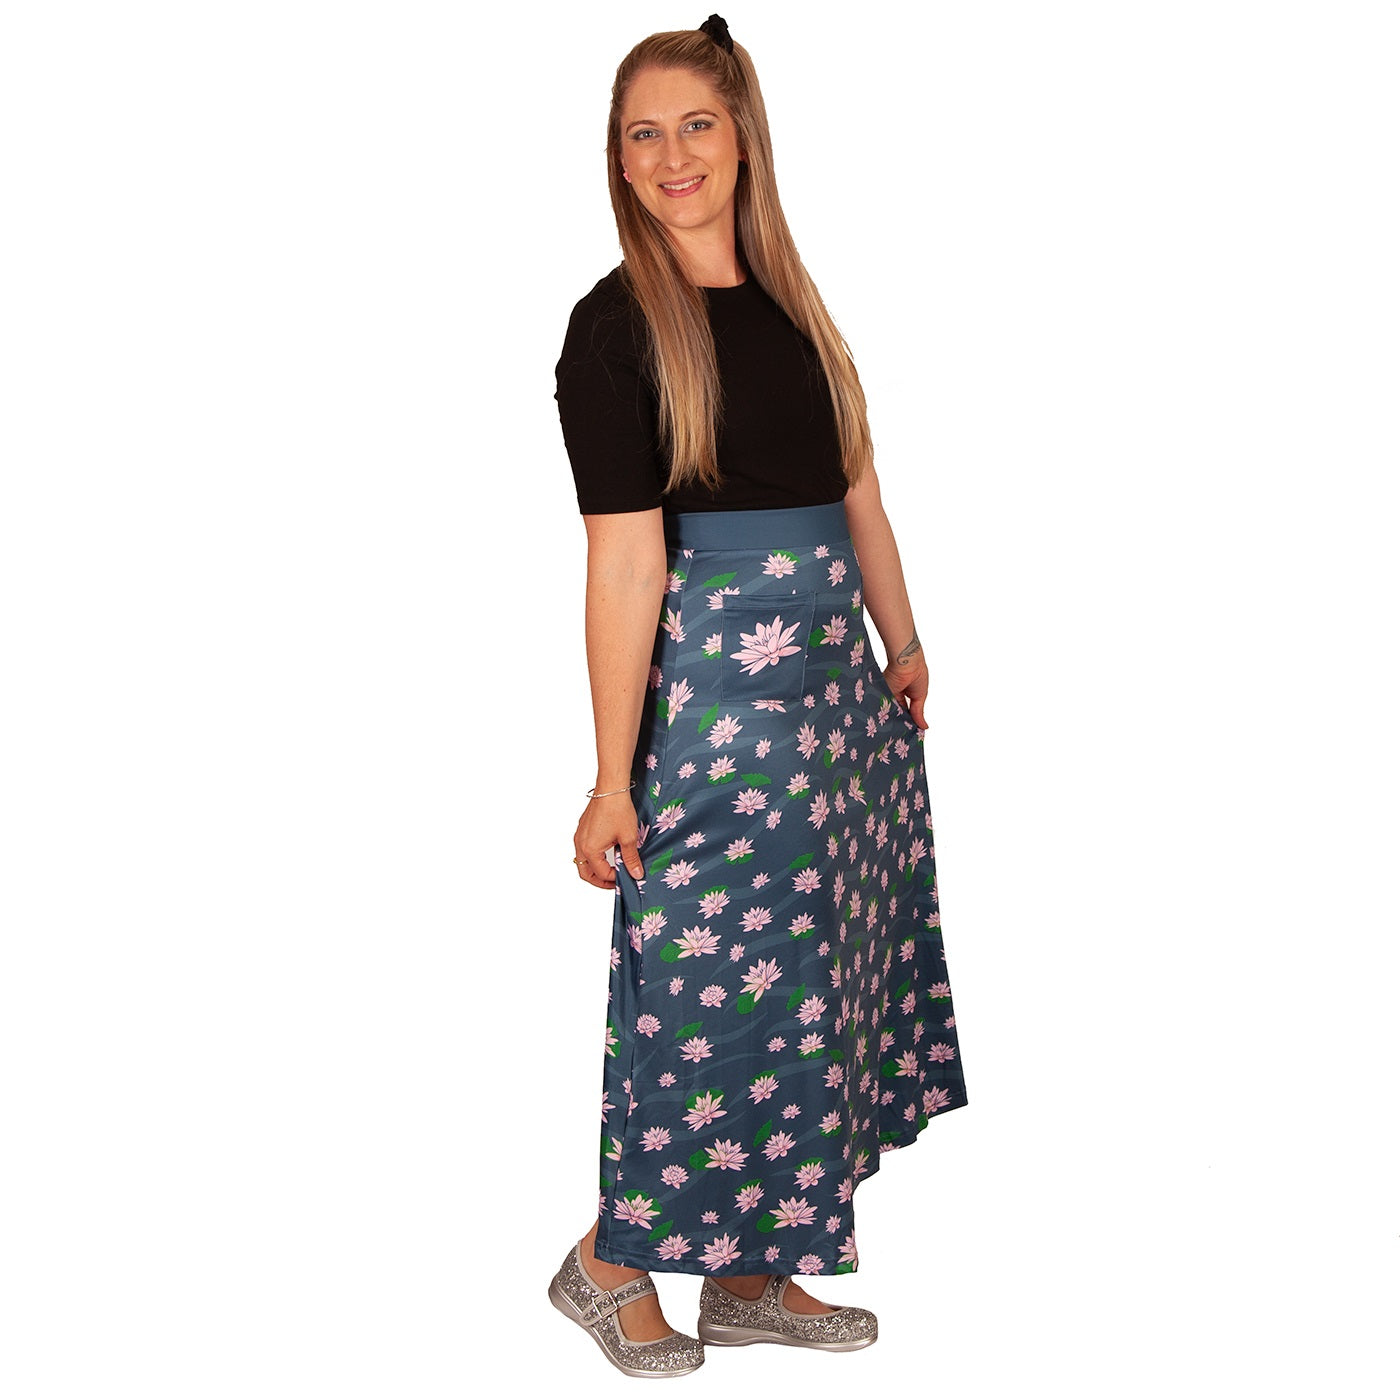 Serene Maxi Skirt by RainbowsAndFairies.com.au (Lotus Flower - Meditation - Yoga - Floral - Skirt With Pockets - Boho - Mod Retro - Vintage Inspired) - SKU: CL_MAXIS_SEREN_ORG - Pic-04